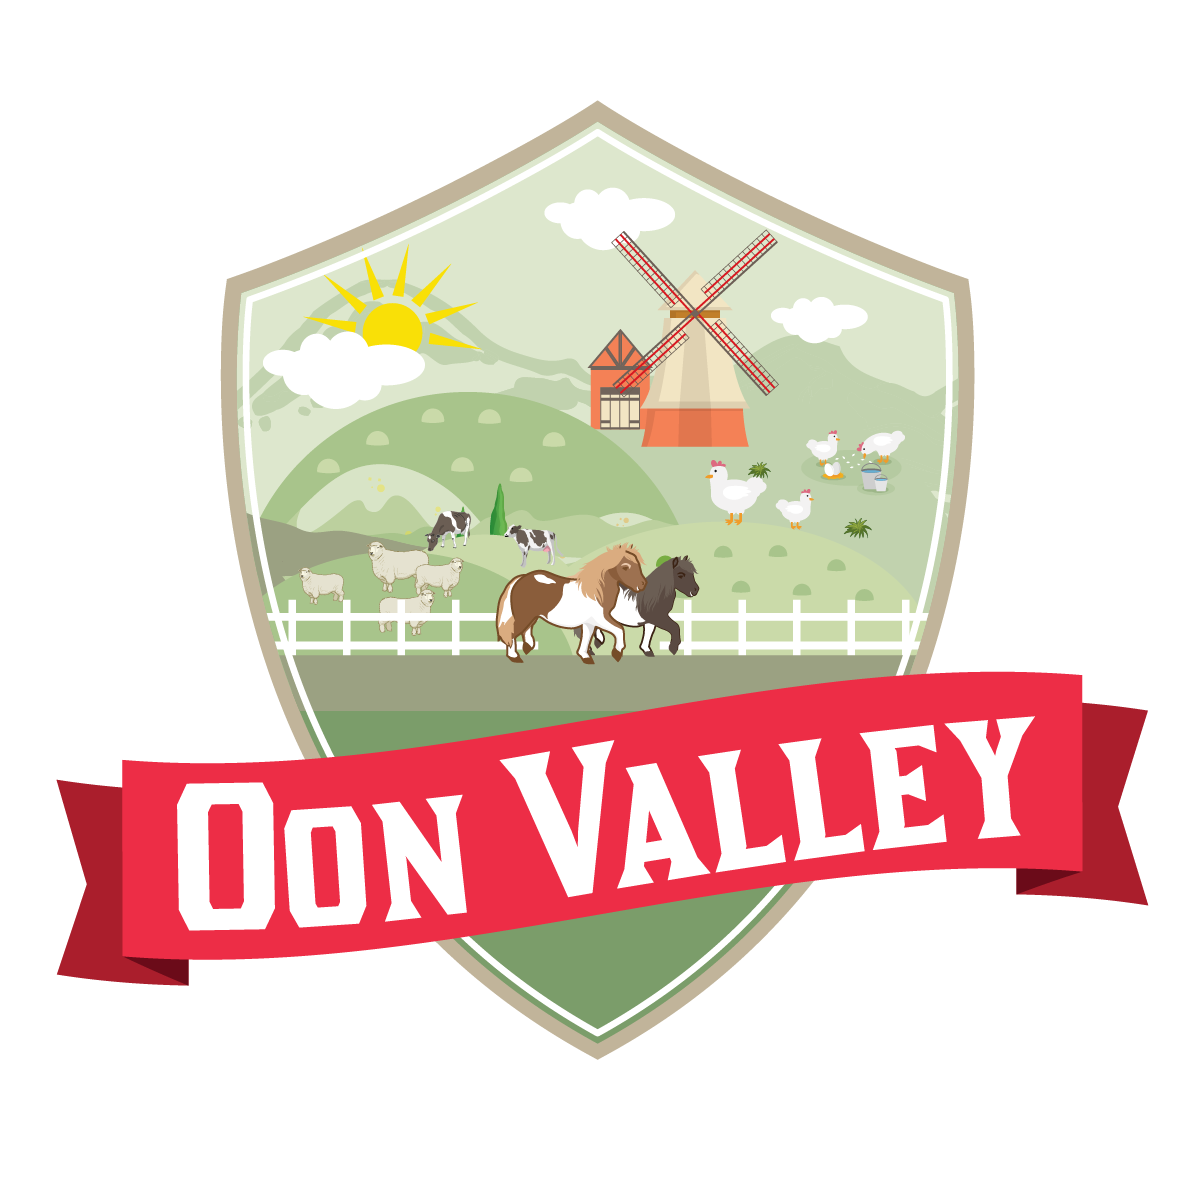 Oon Valley Logo